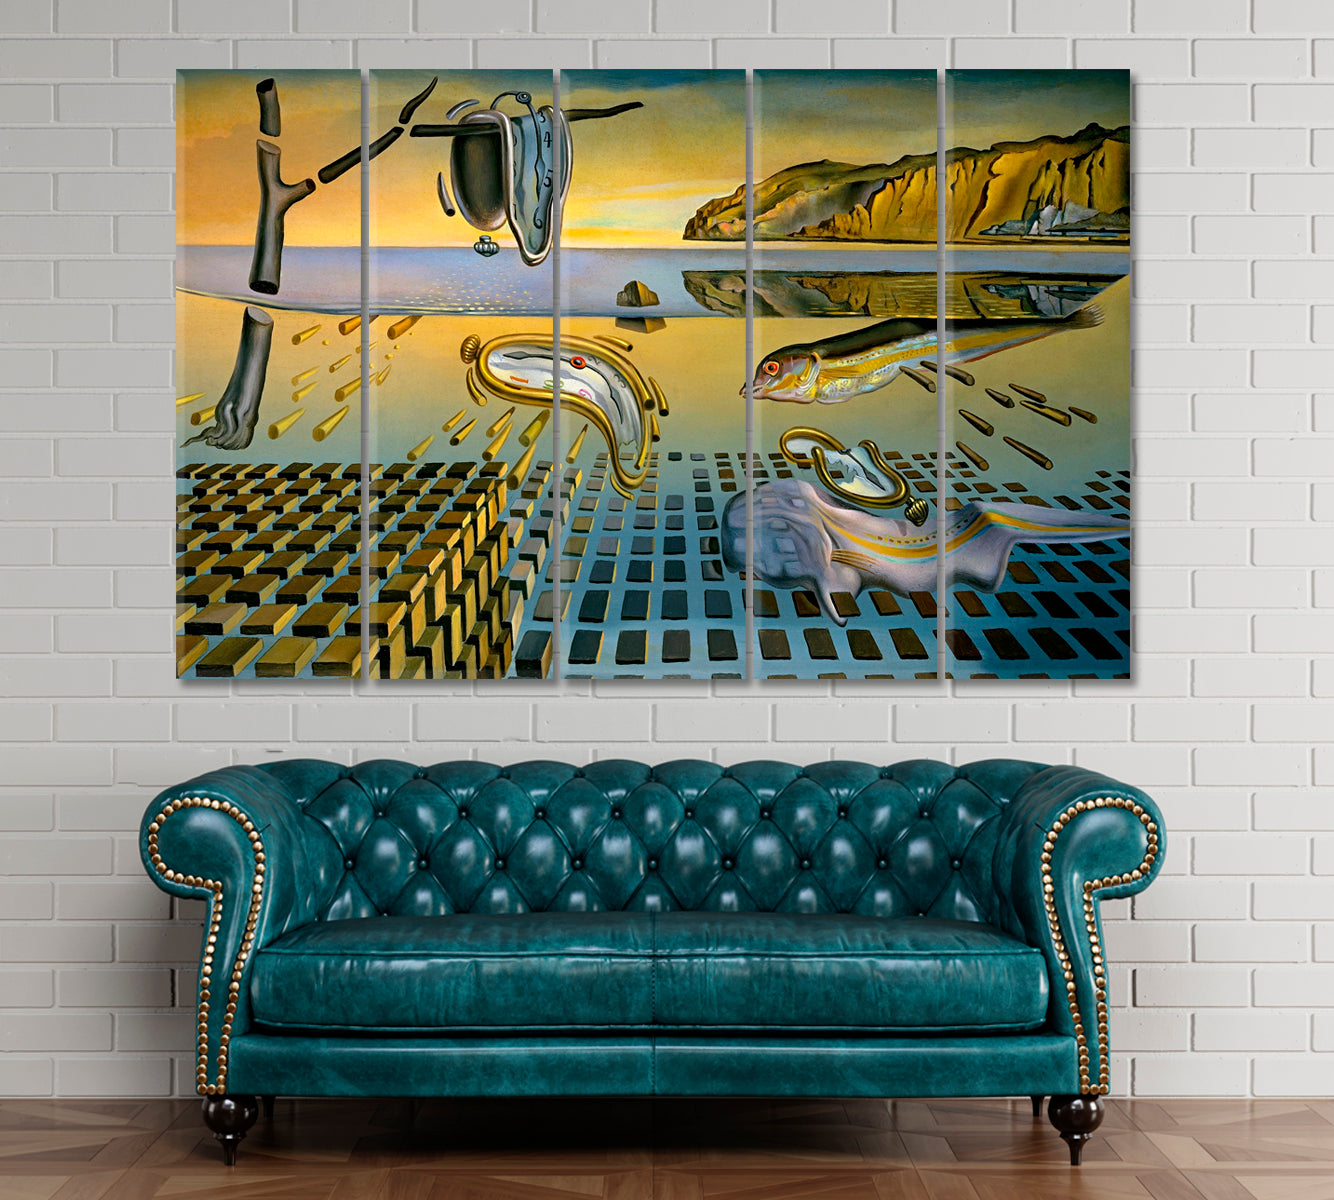 Salvador Dali Motives Surreal Abstract Modern Artwork Surreal Fantasy Large Art Print Décor Artesty 5 panels 36" x 24" 